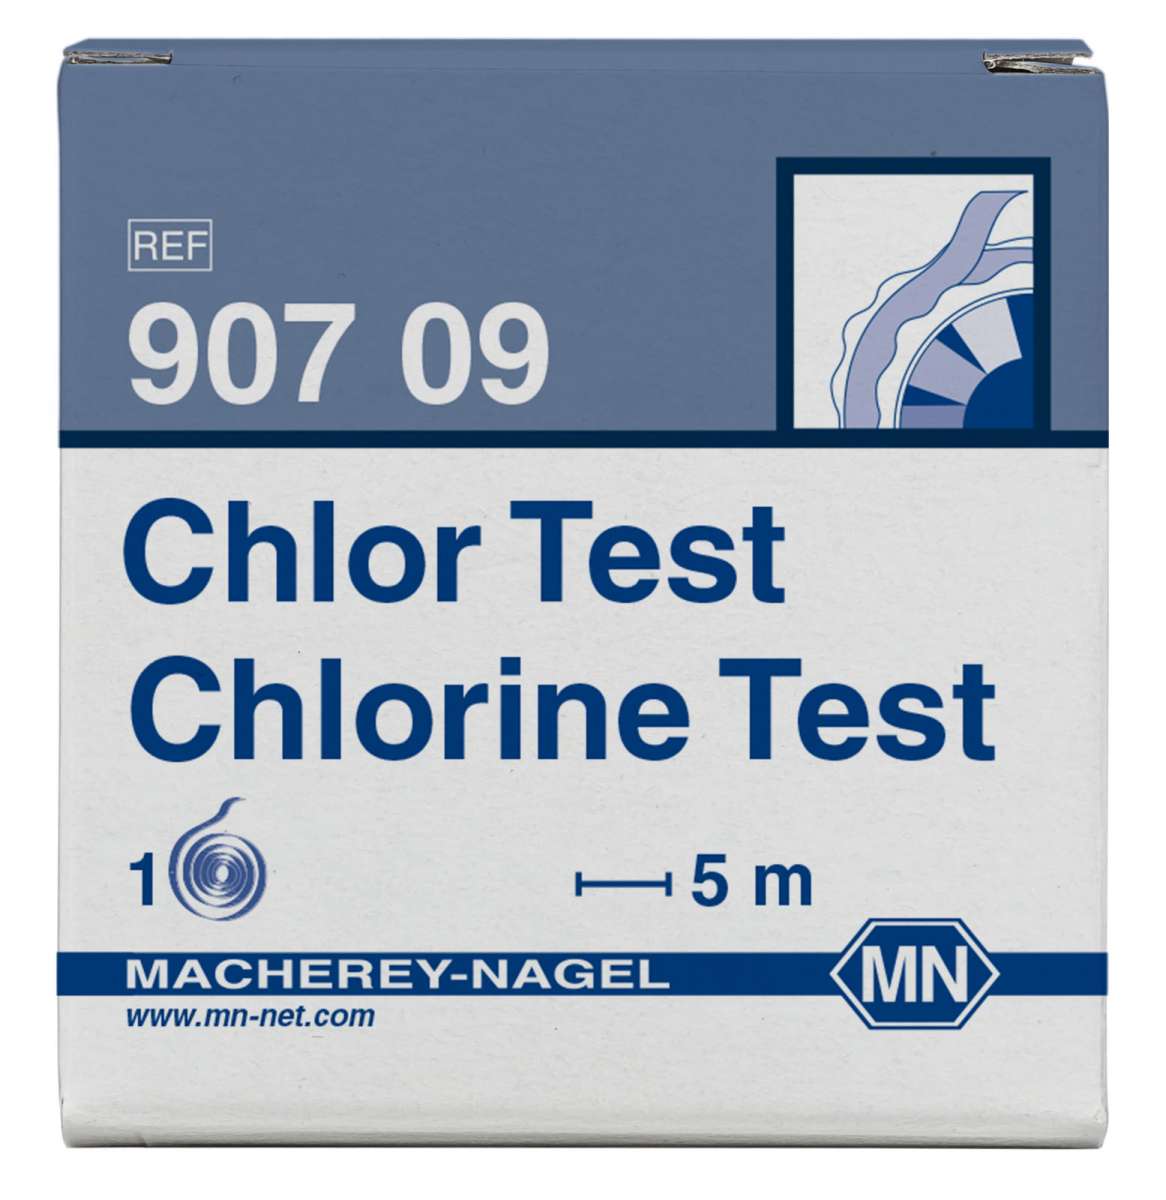 Chlorine Test (Reel of 5m length and 10mm width)